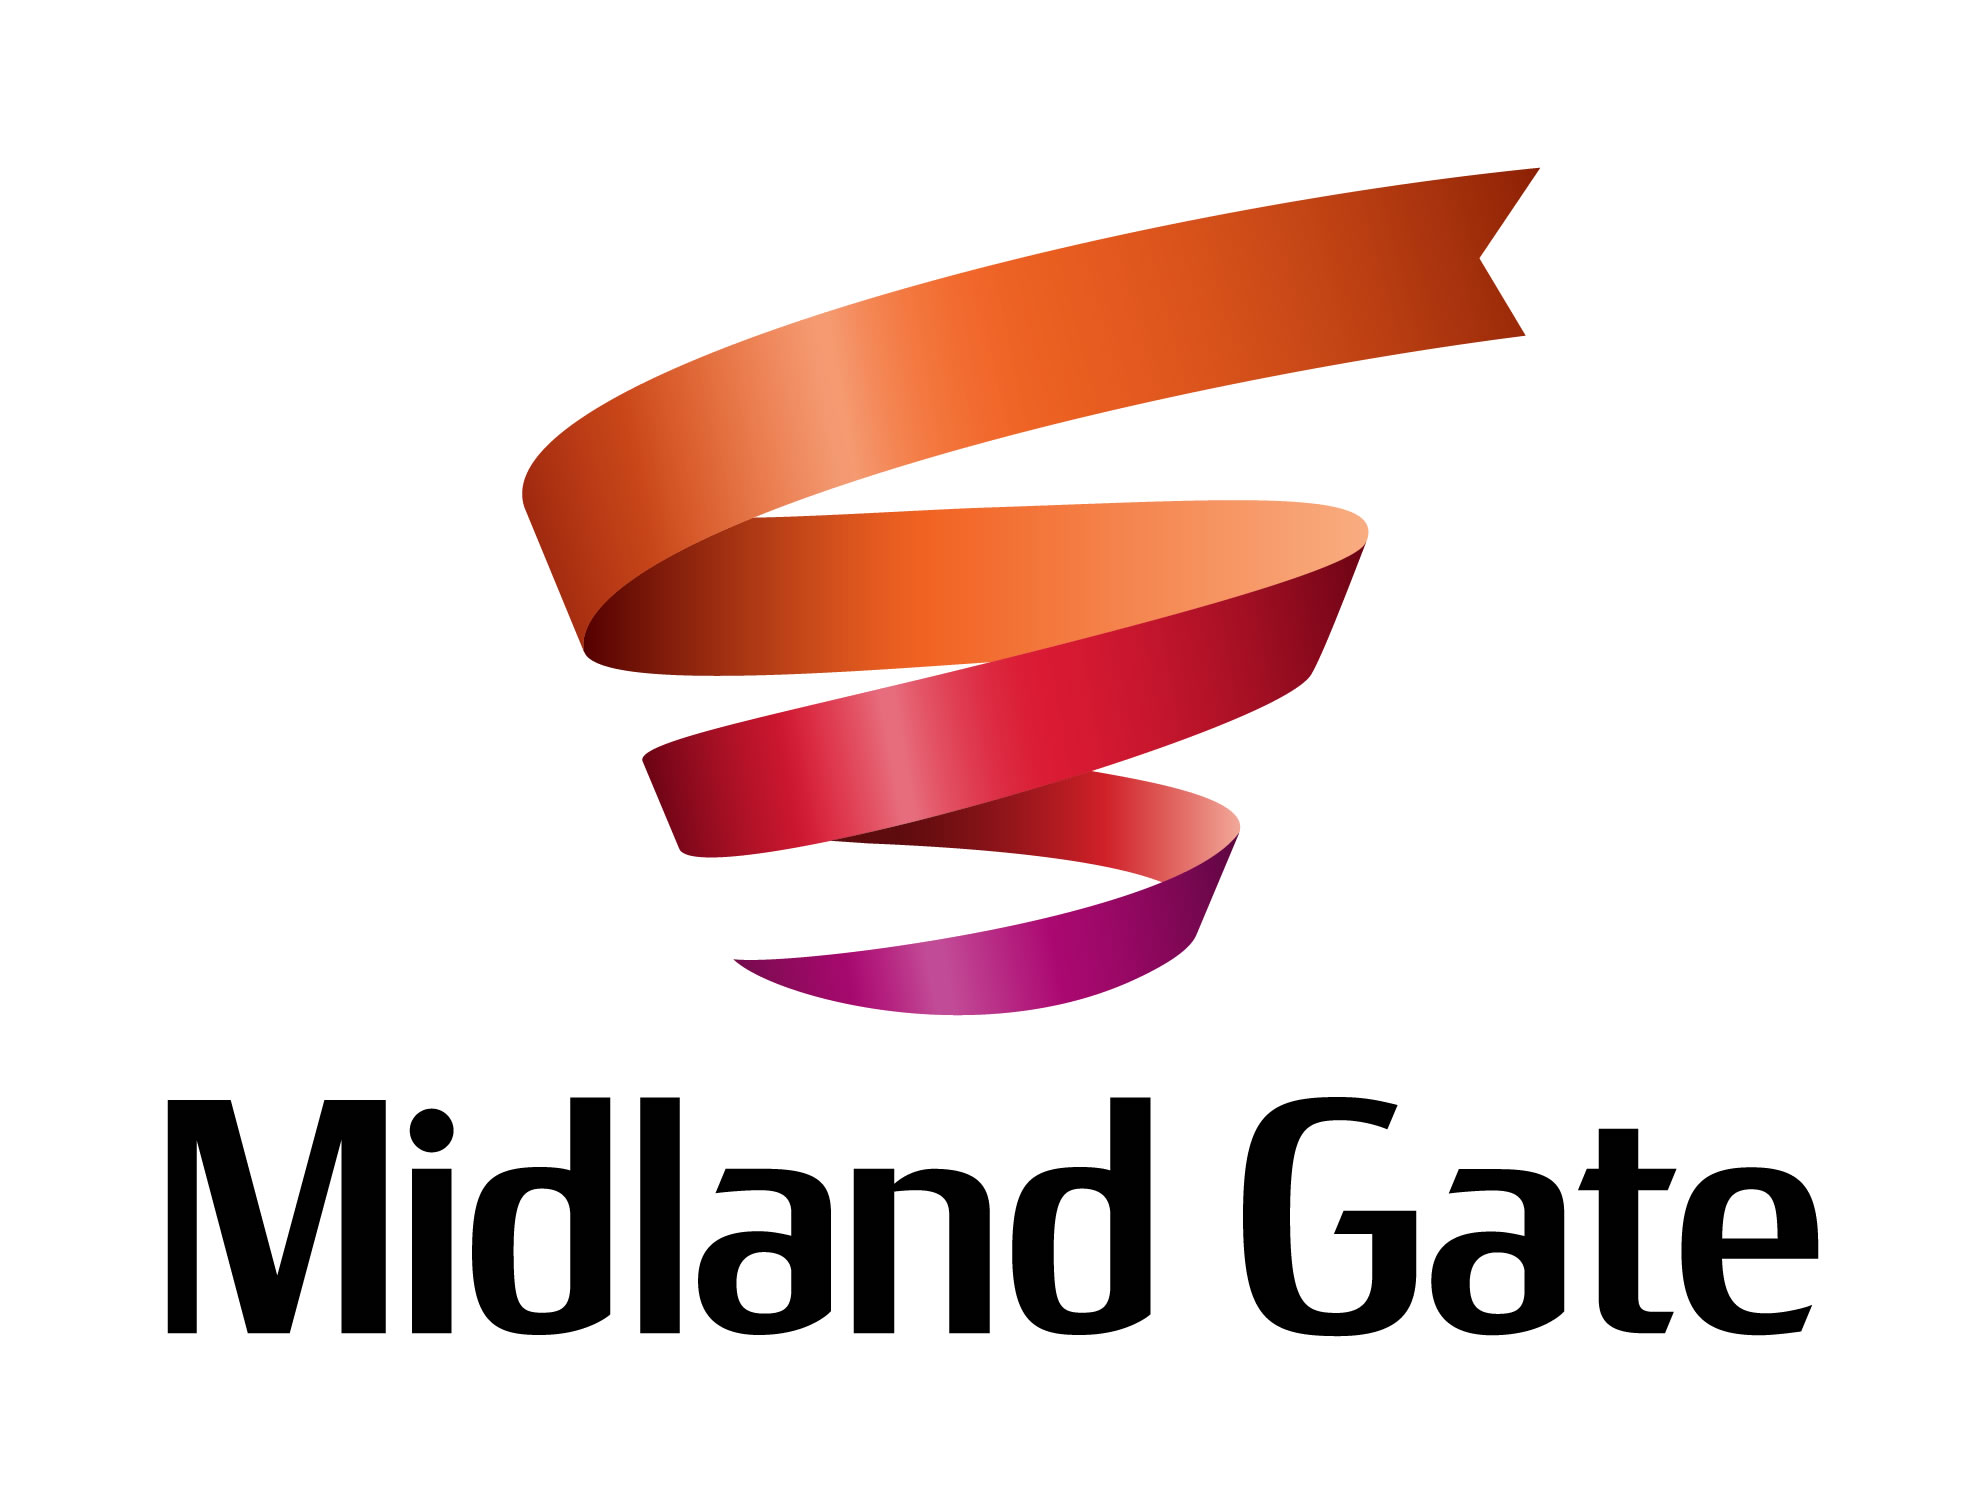 Midland Gate logo_red ribbon_VER.jpg